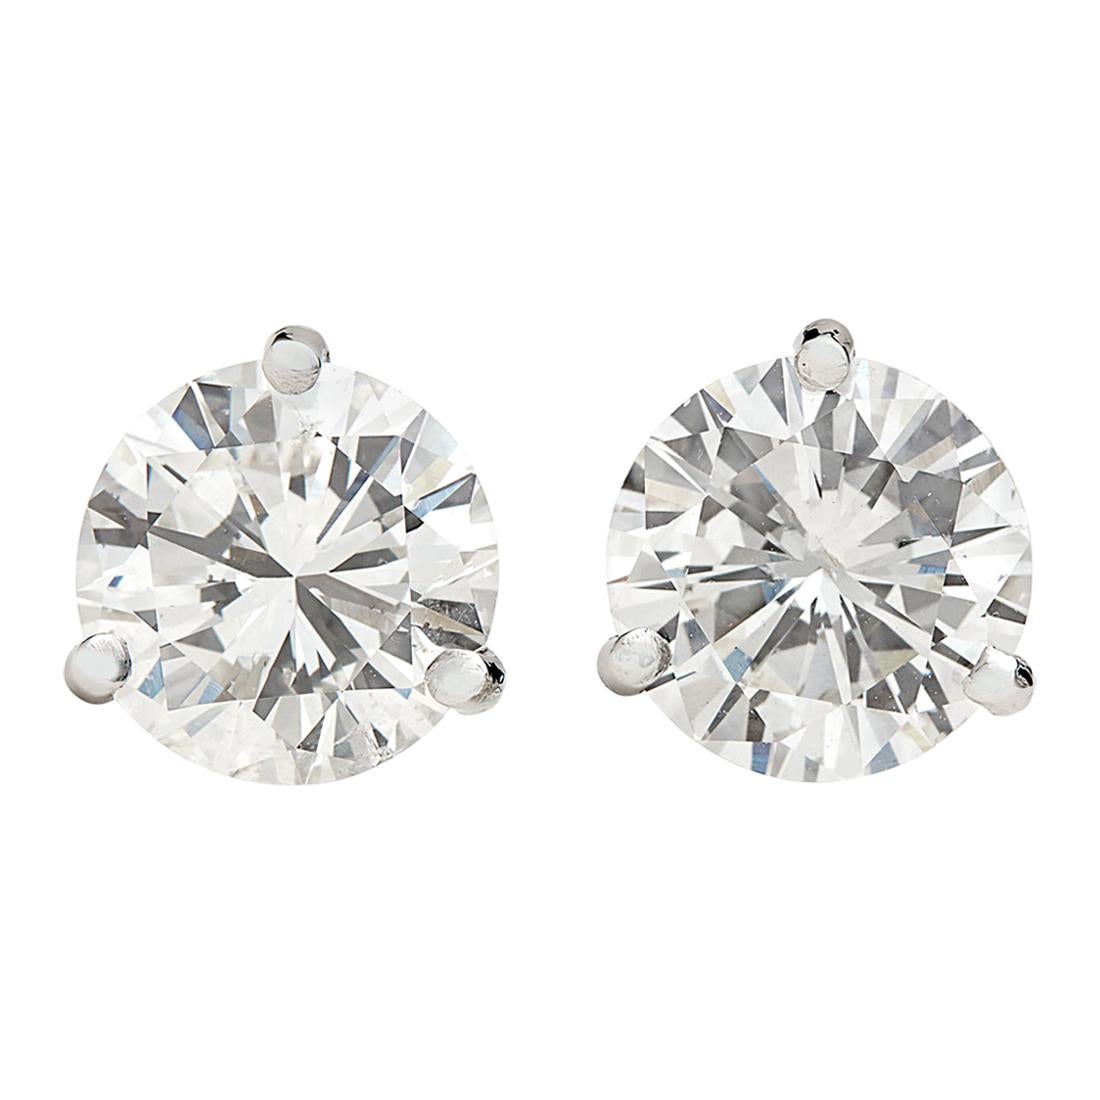 Stunning 4.04 Carat Round Brilliant Diamond Stud Earrings